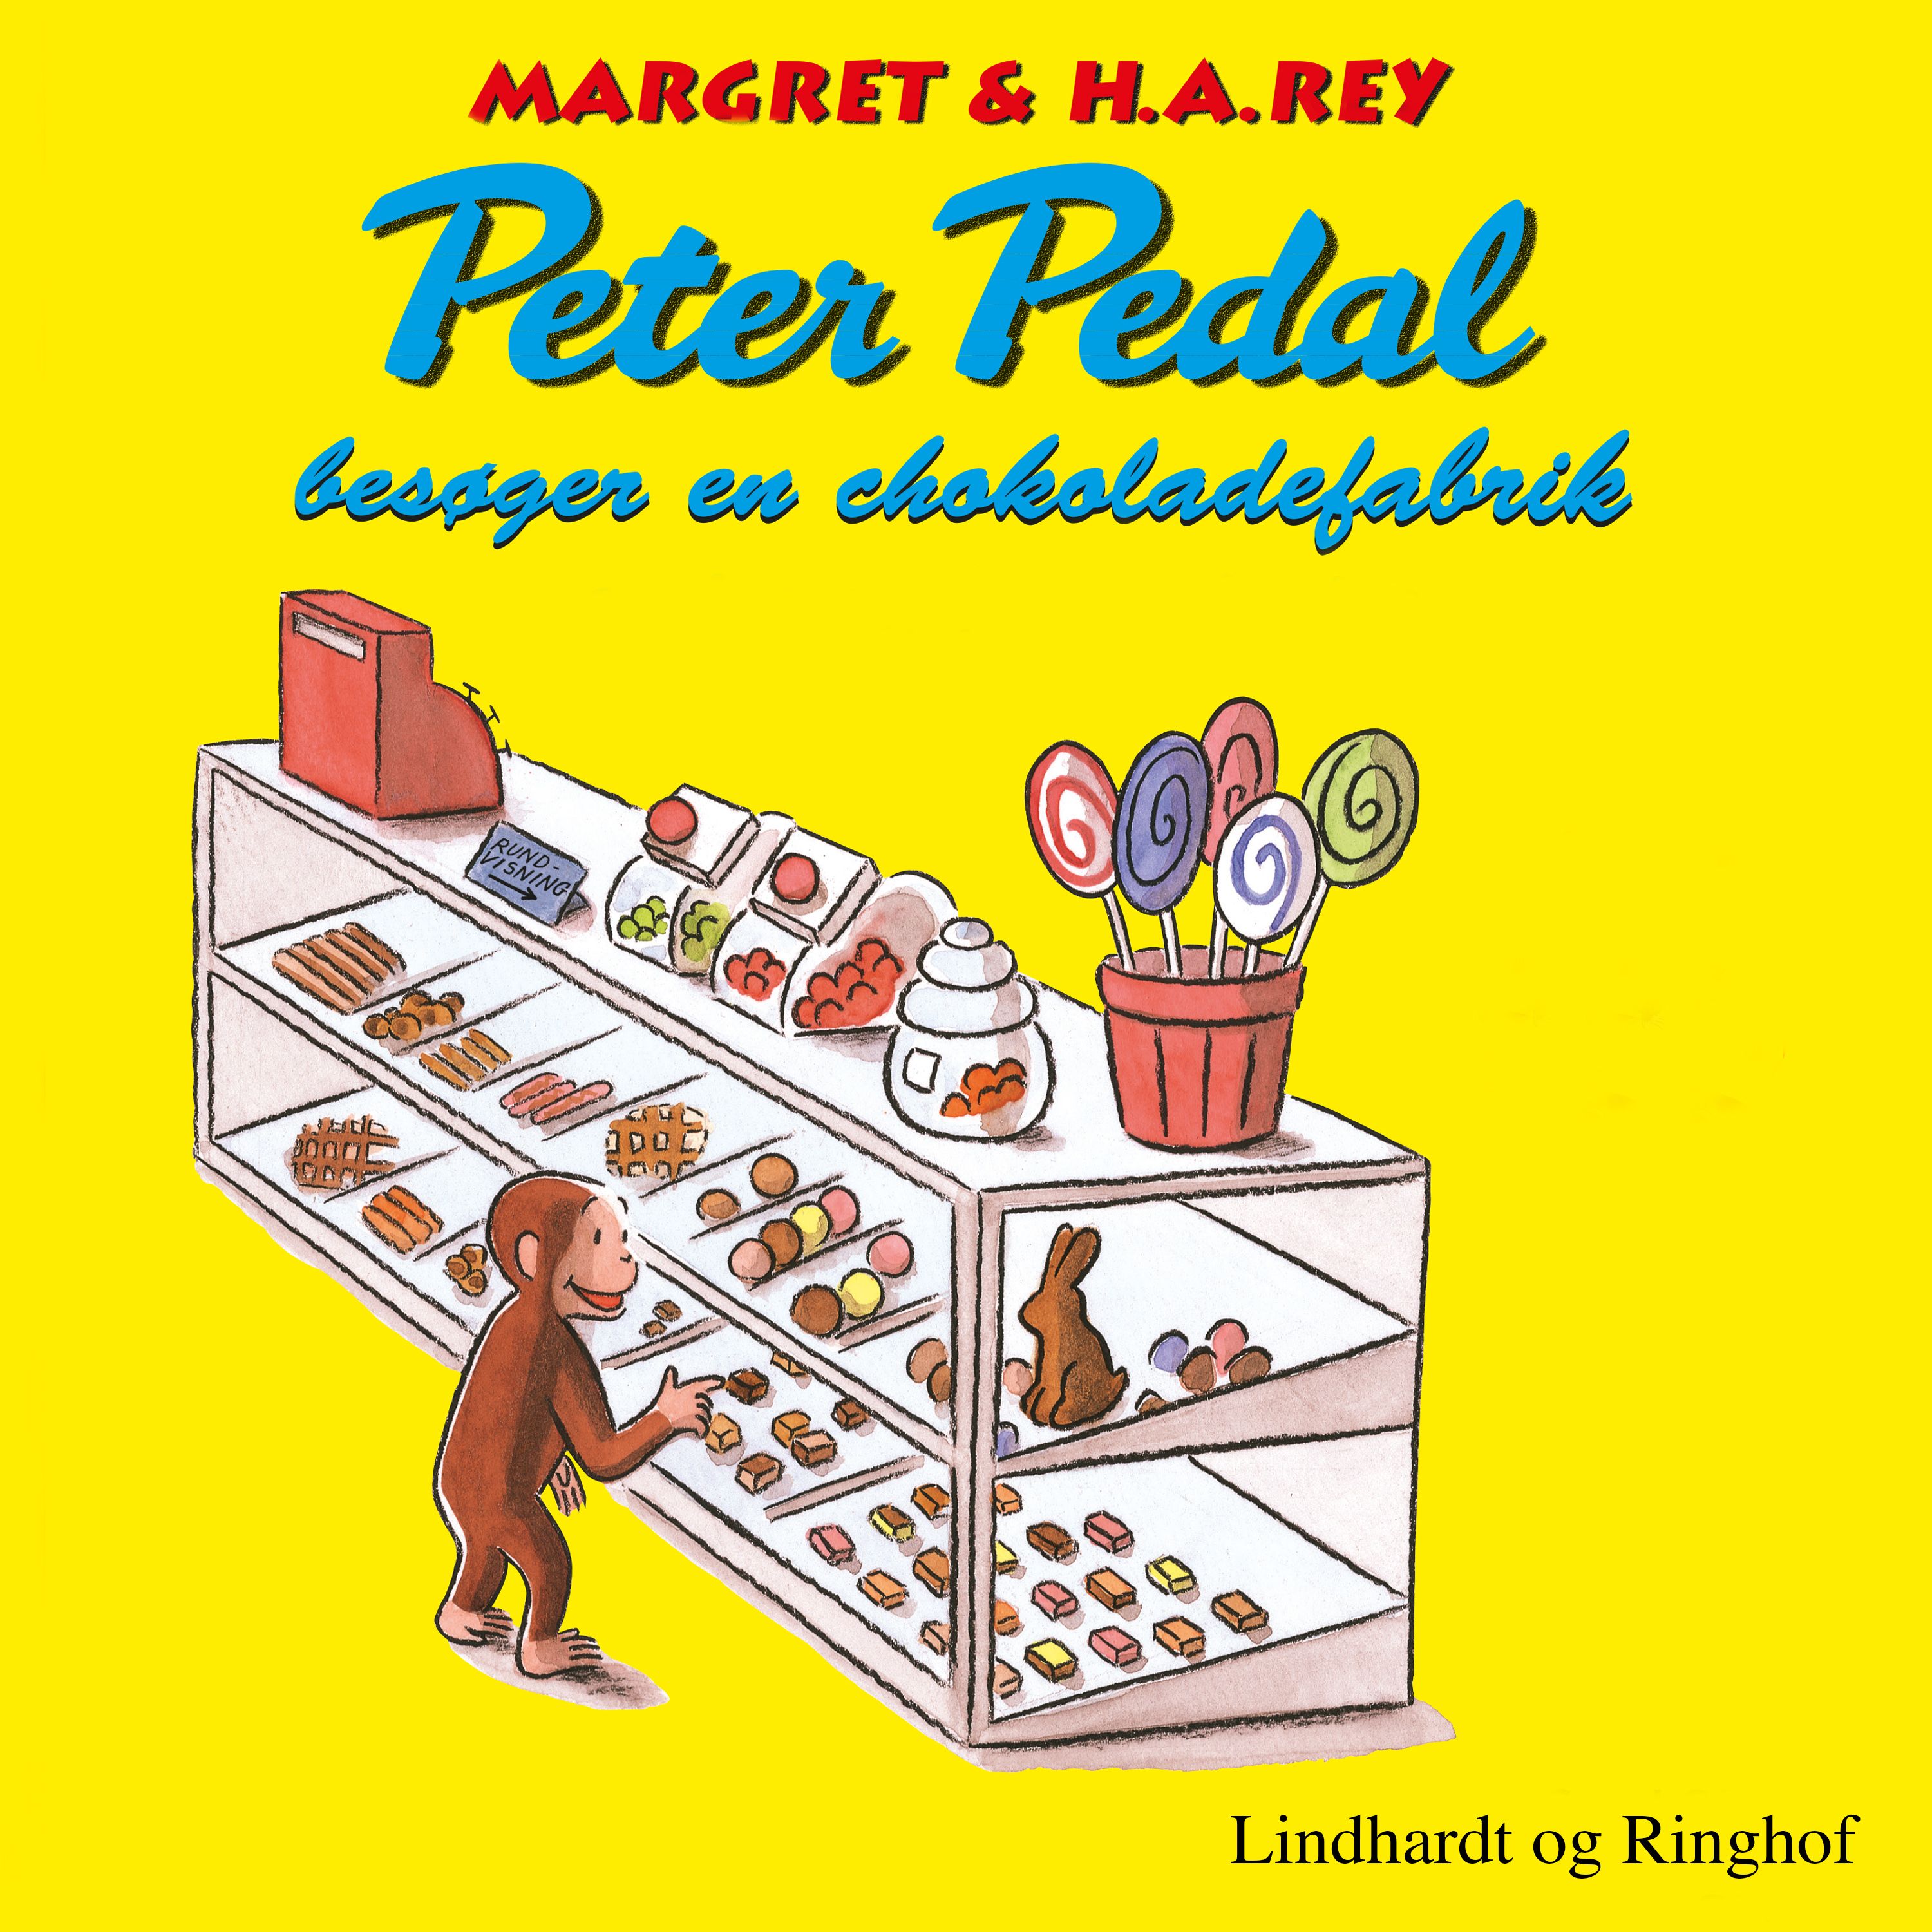 Peter Pedal besøger en chokoladefabrik, ljudbok av H.a. Rey